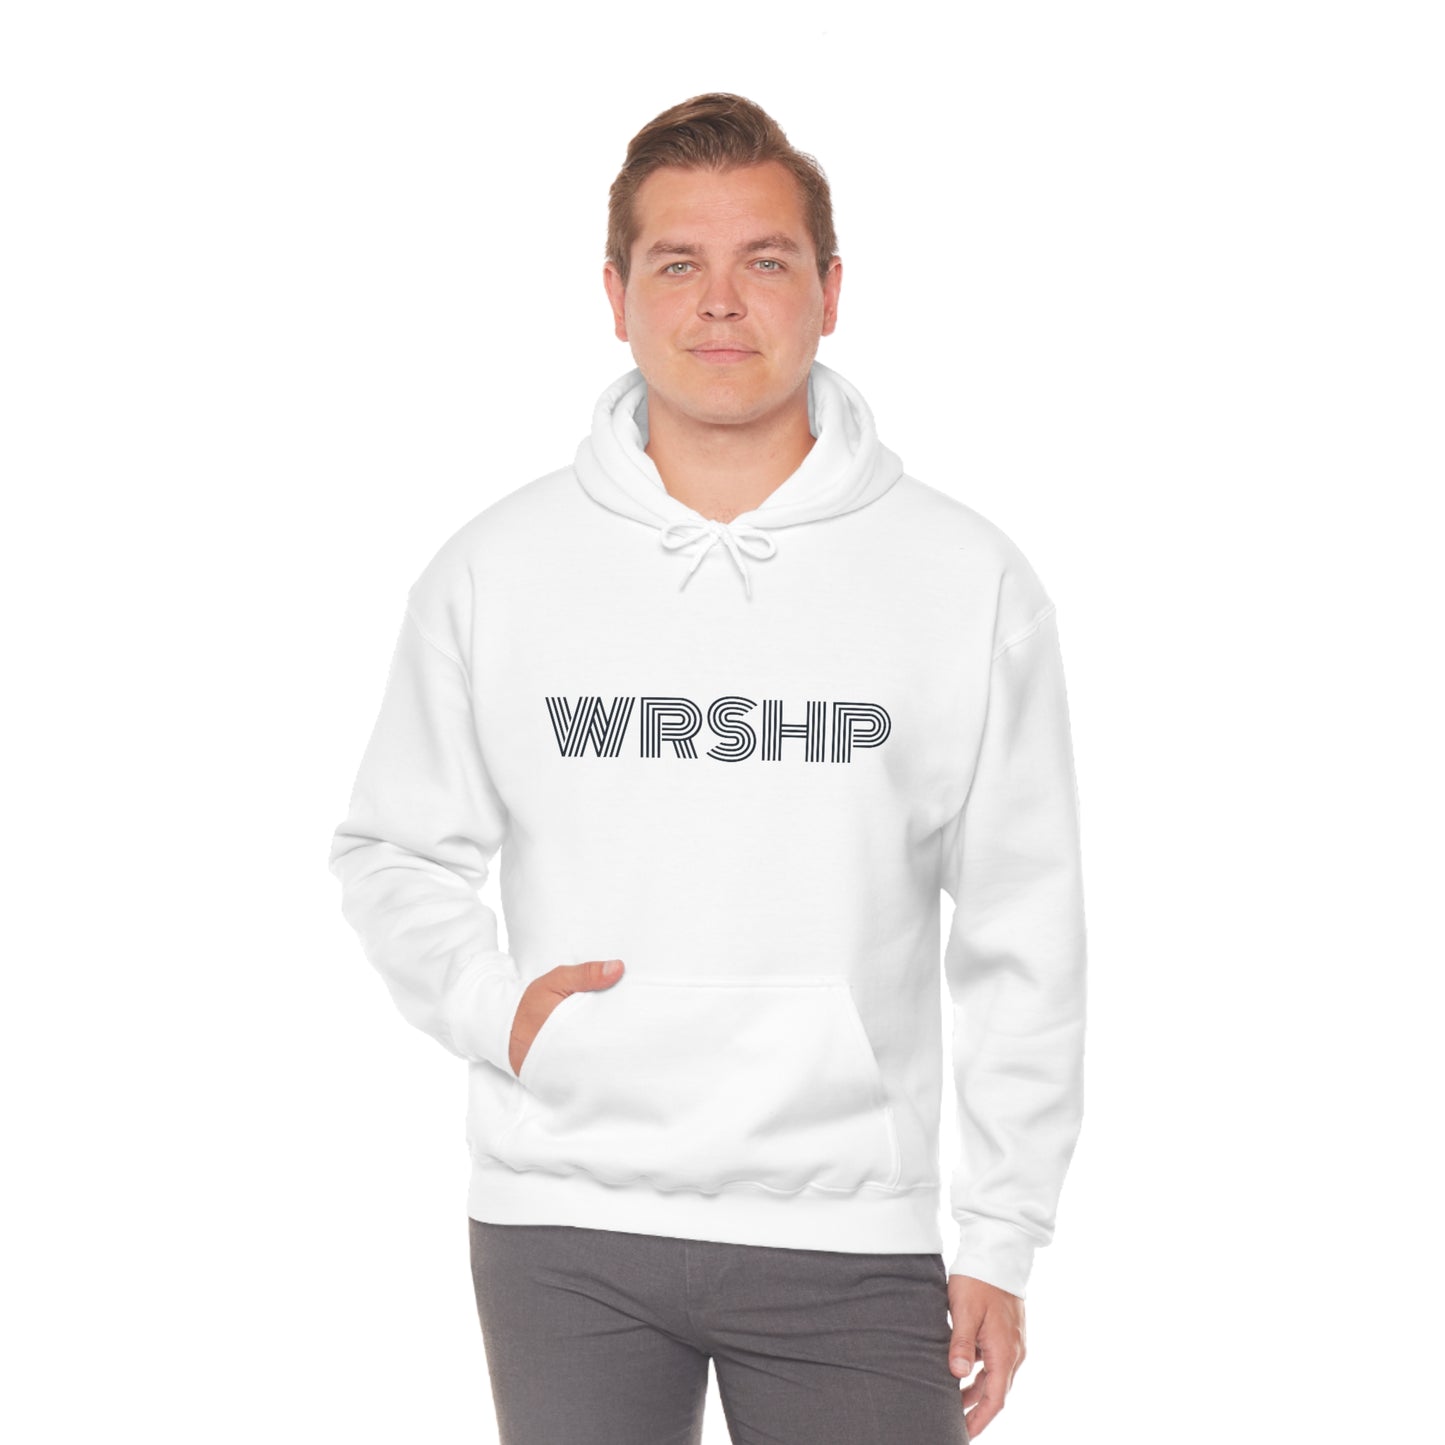 Worship Hooded Sweatshirt